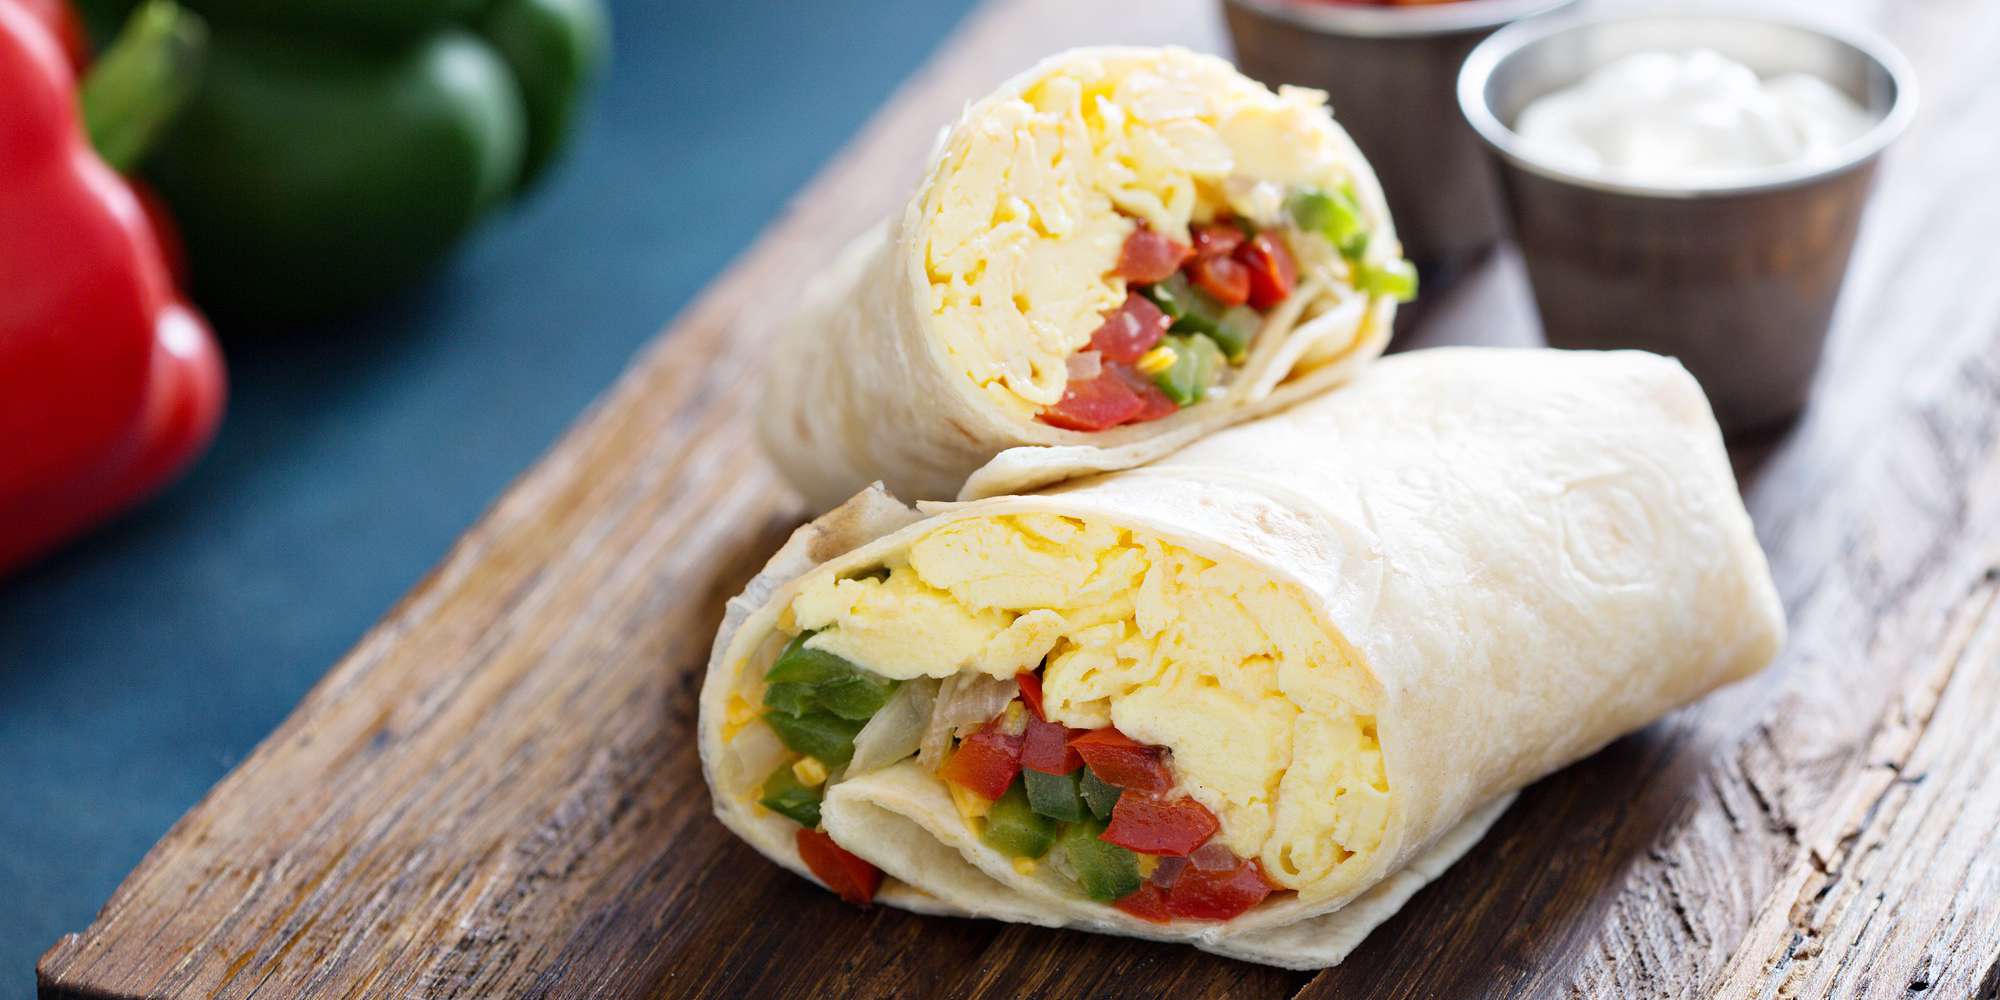 https://www.mealgarden.com/media/recipe/2019/10/bigstock-Vegetarian-Breakfast-Burrito-W-256636552.jpeg